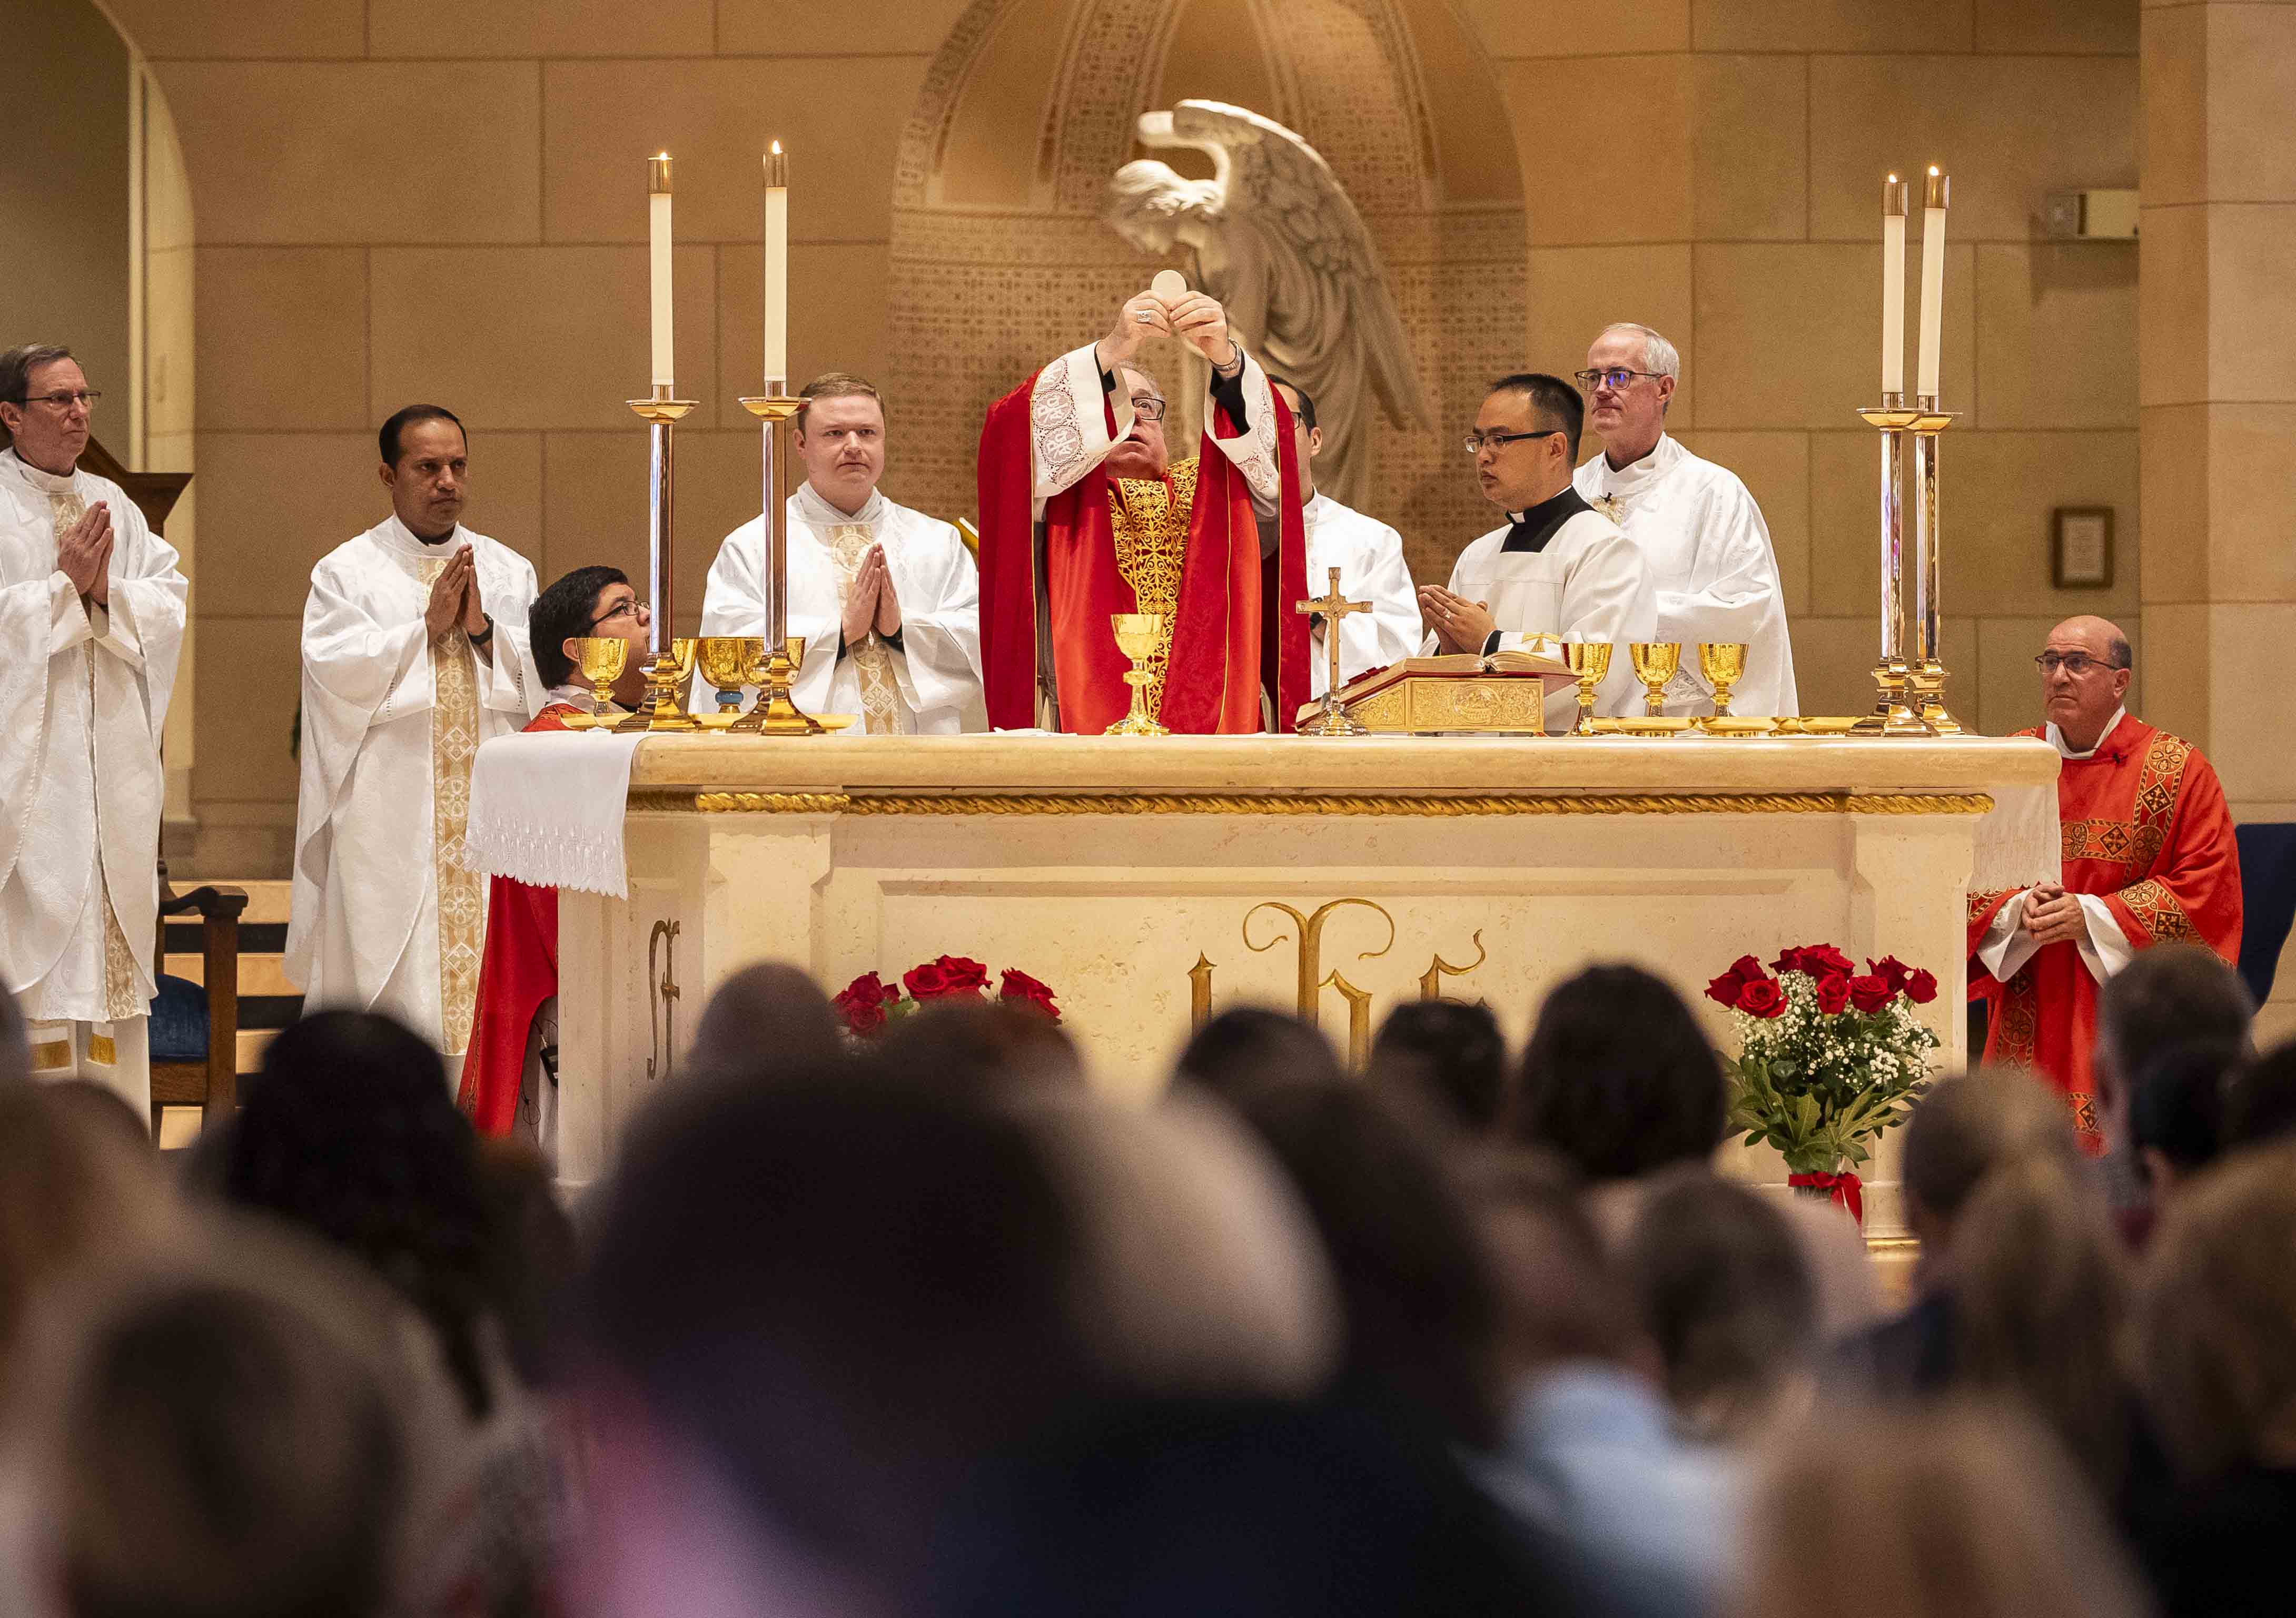 B.Olson presents the Eucharist during Mass